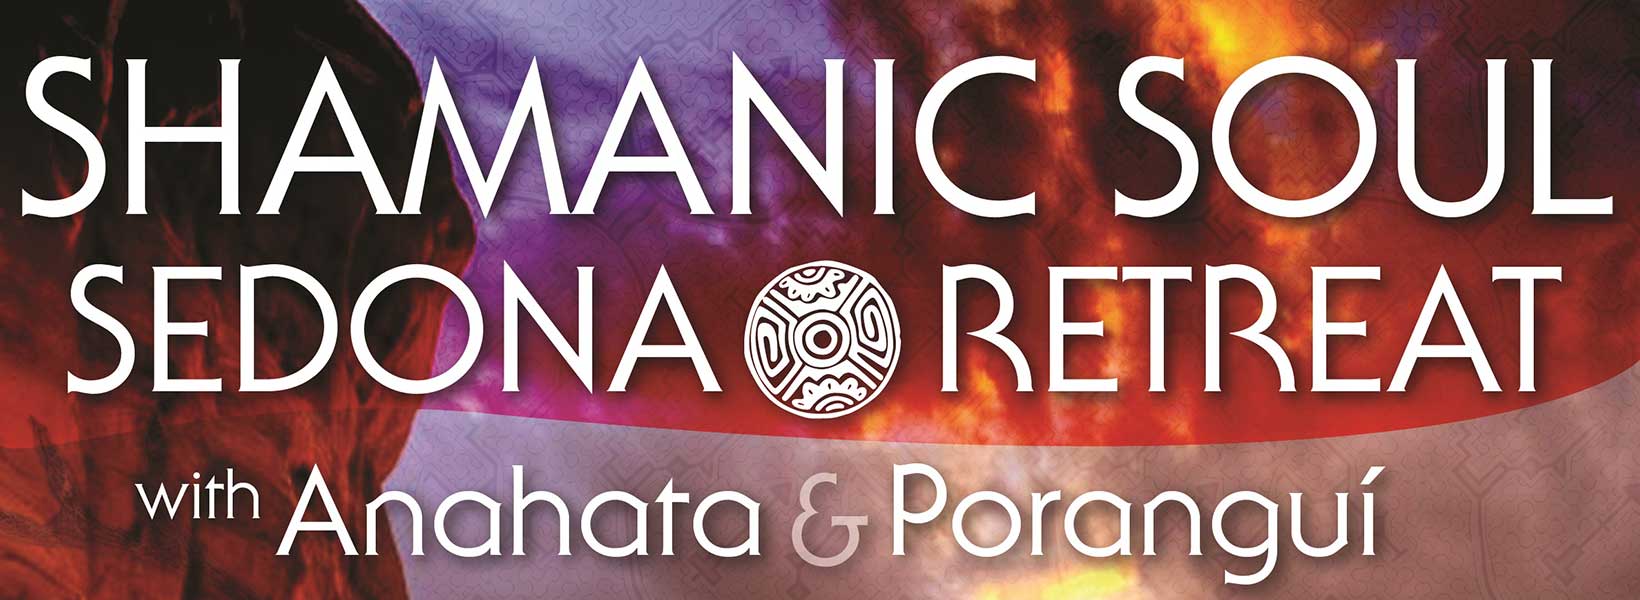 Shamanic Soul Retreat with Anahata & Porangui Banner